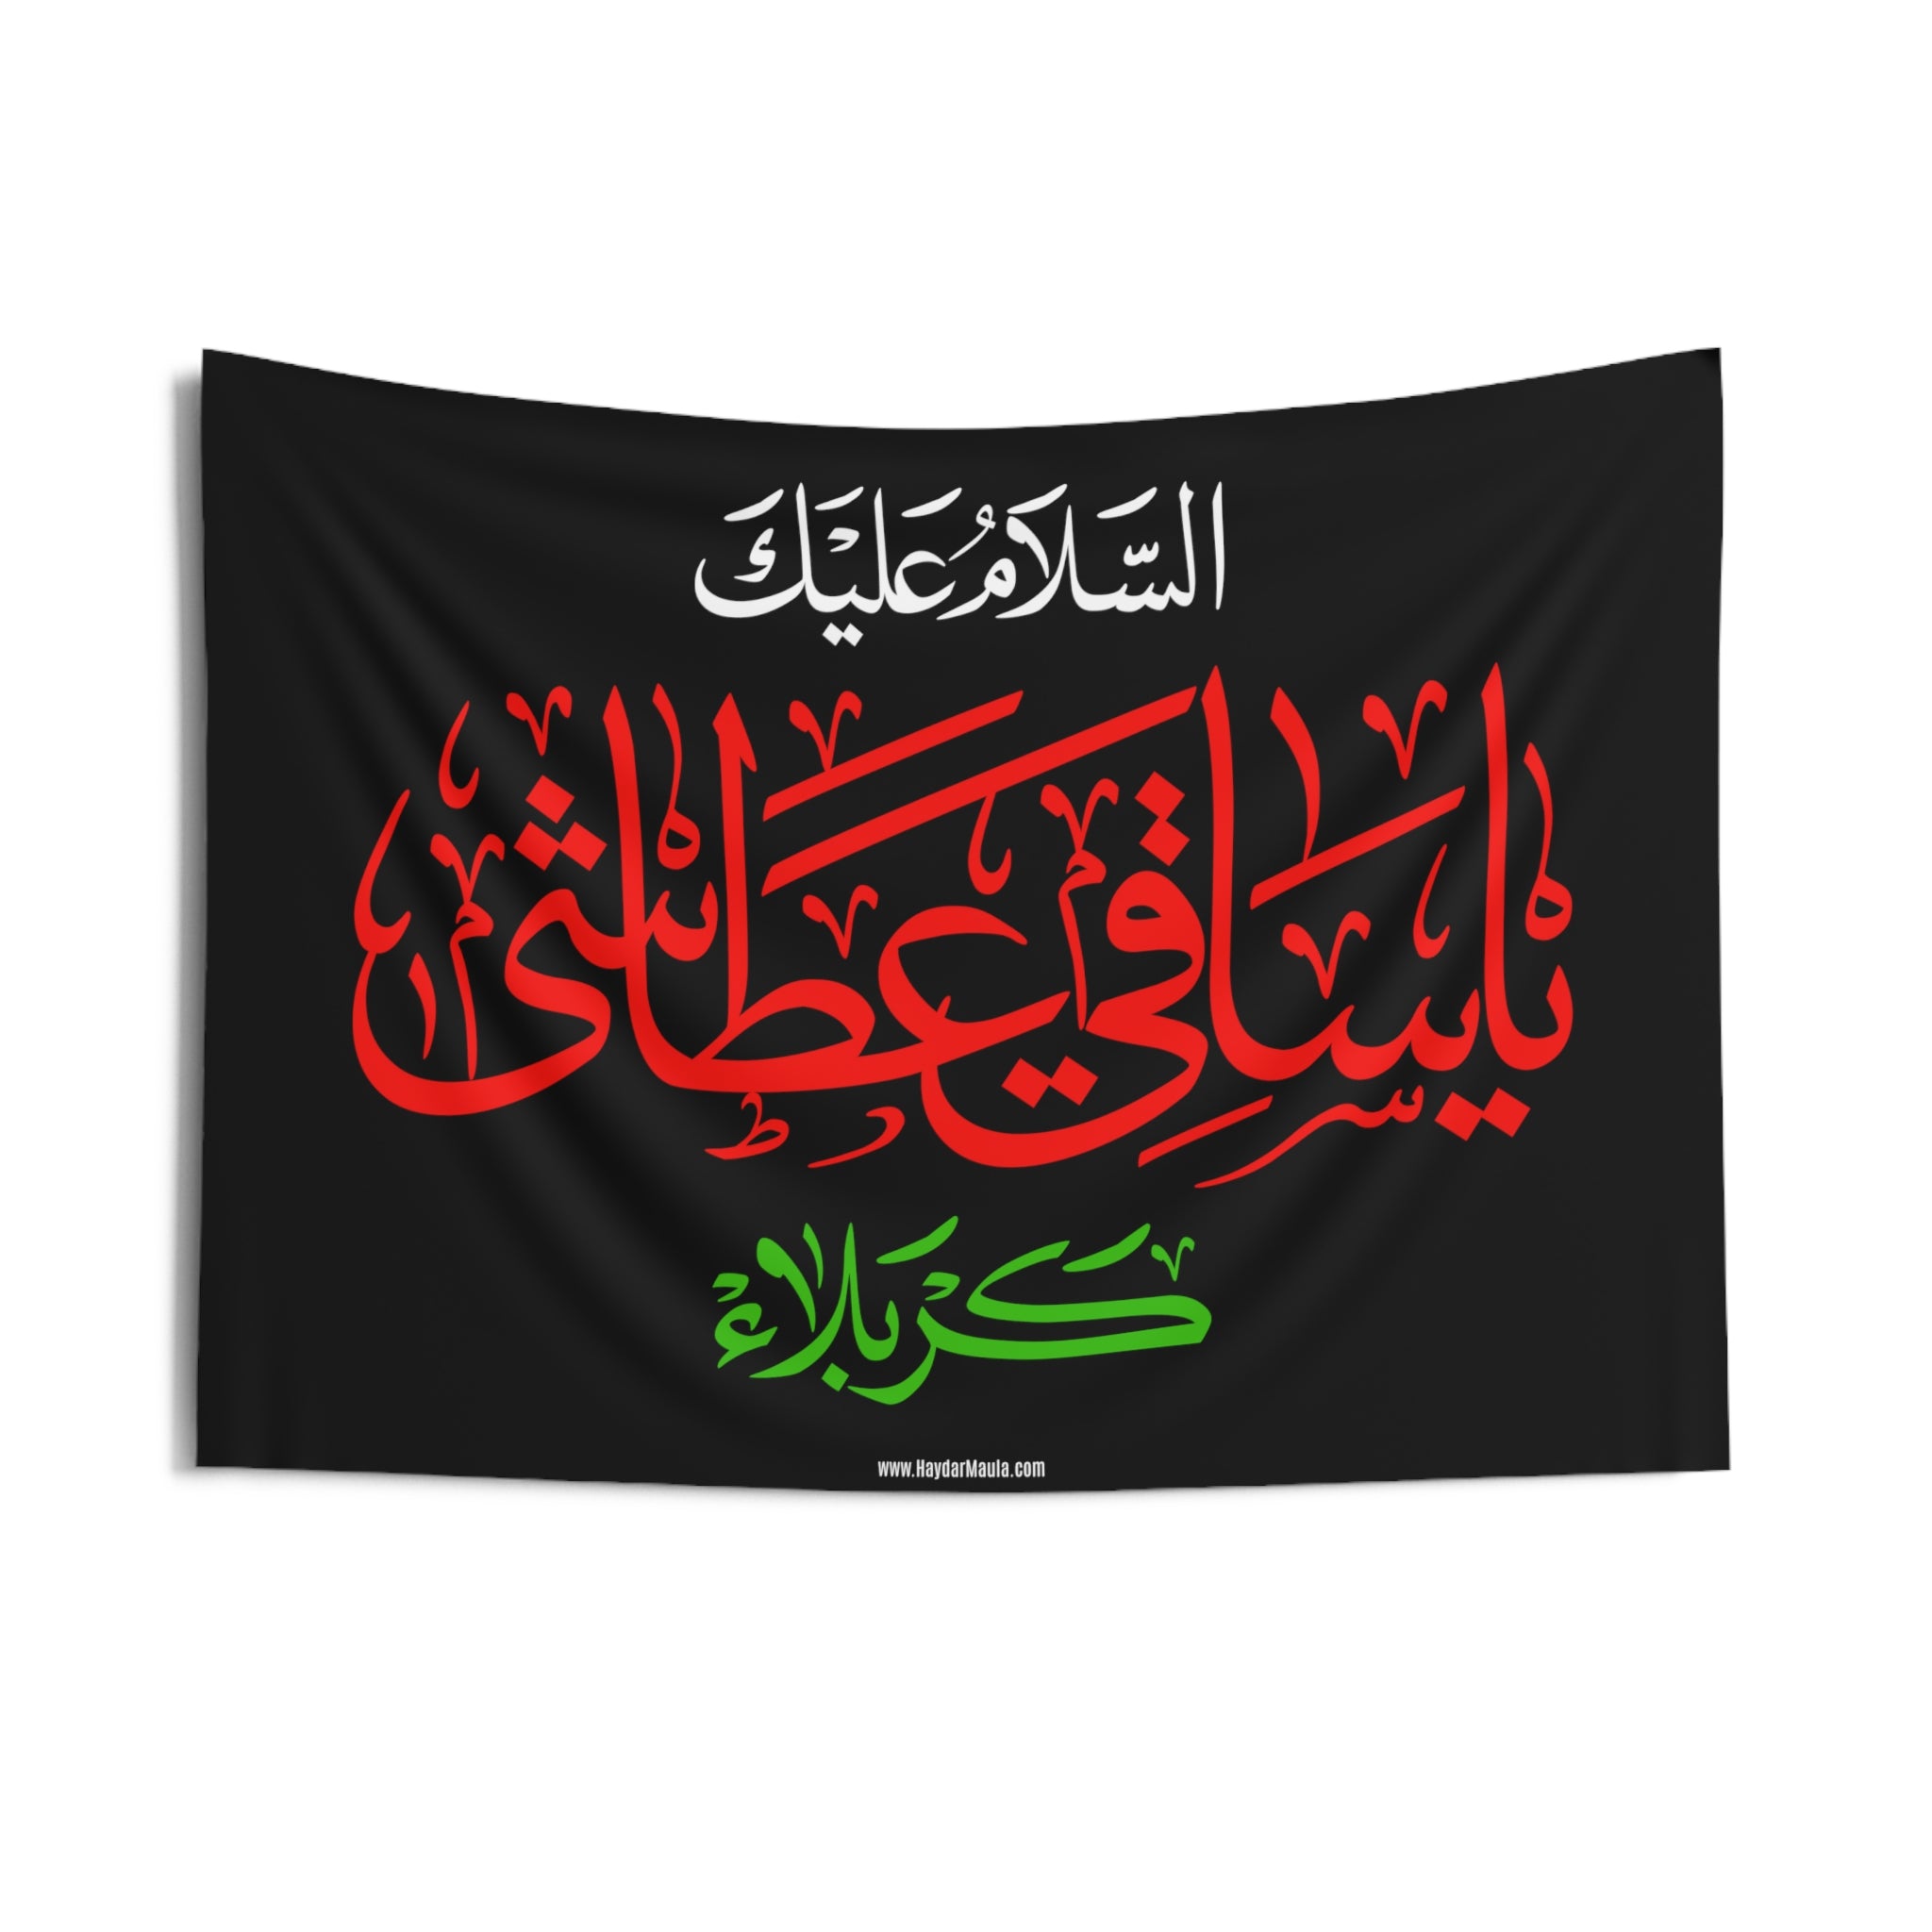 Assalamo Ya Atashi Karbala - Red Green - Wall Tapestry/Flag Red, Muharram Banner for indoor gatherings, Majaliss, Ashura, Karbala, Arbaeen